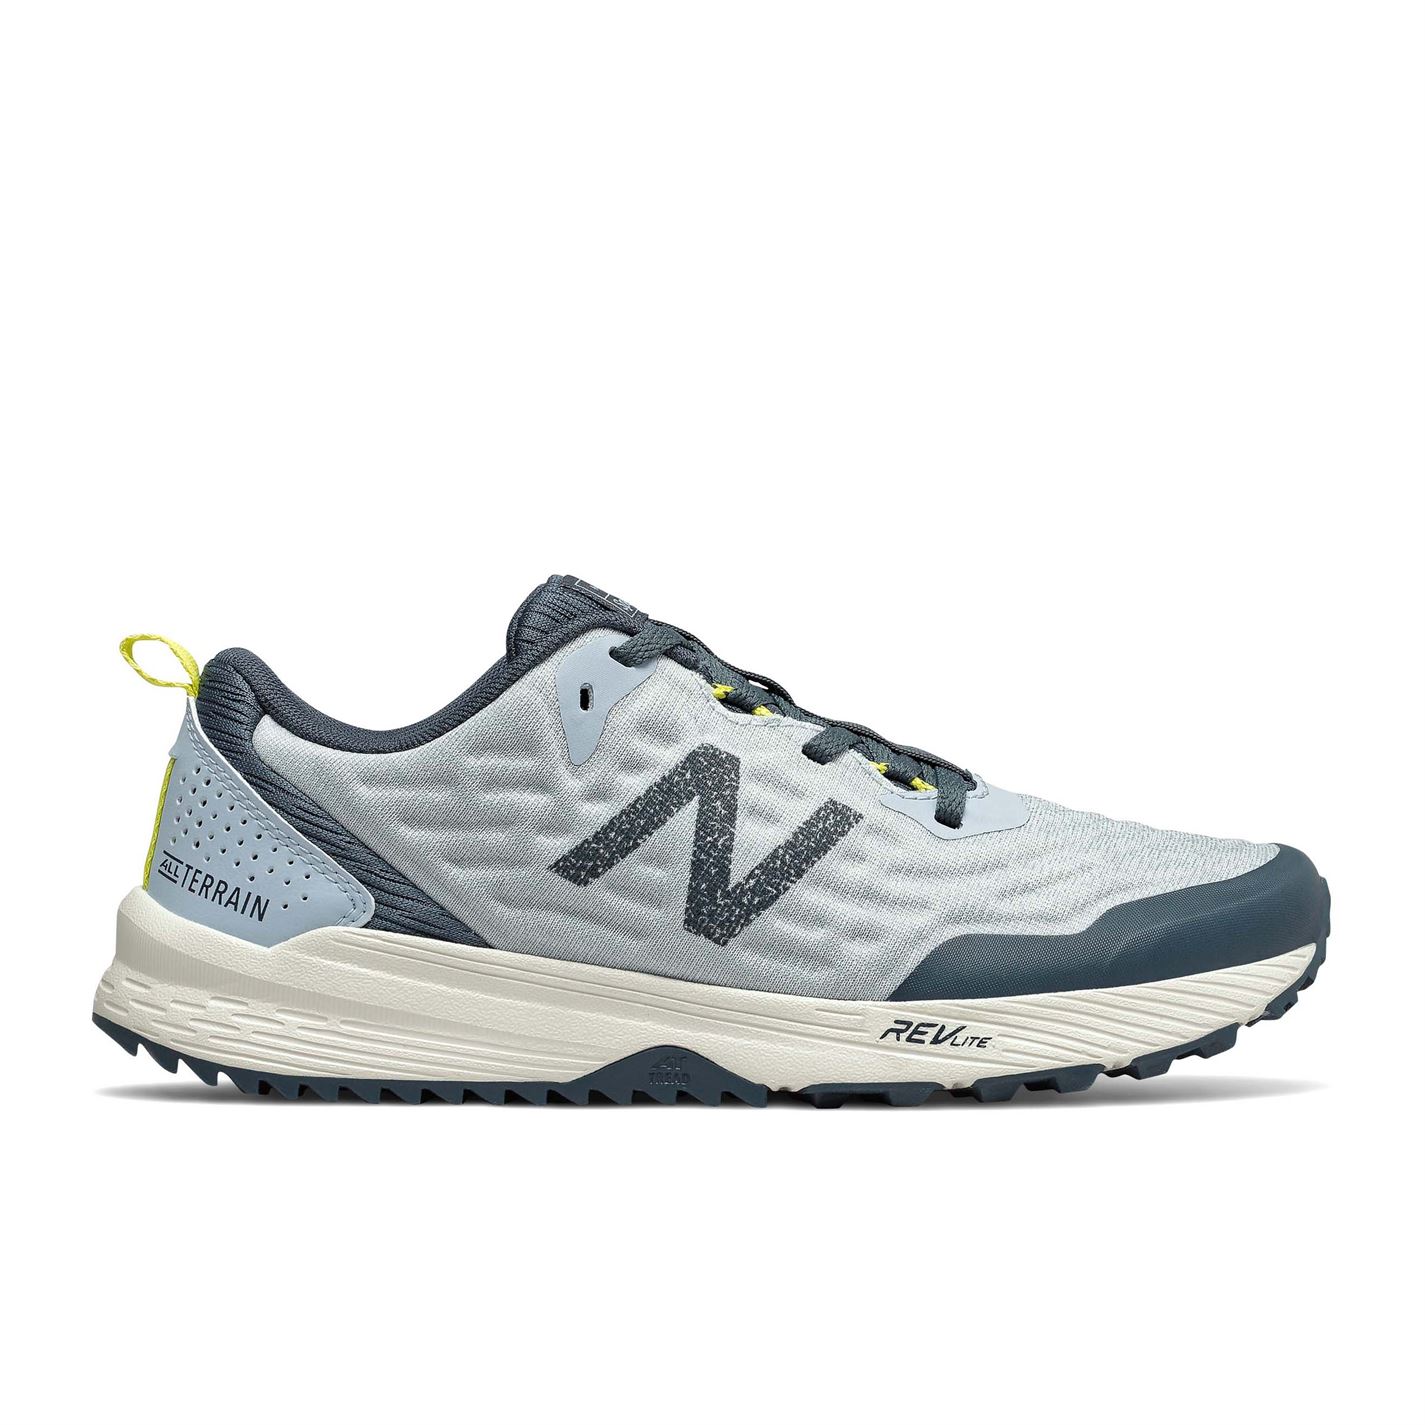 New Balance Nitrel Ladies Trail Running Shoes